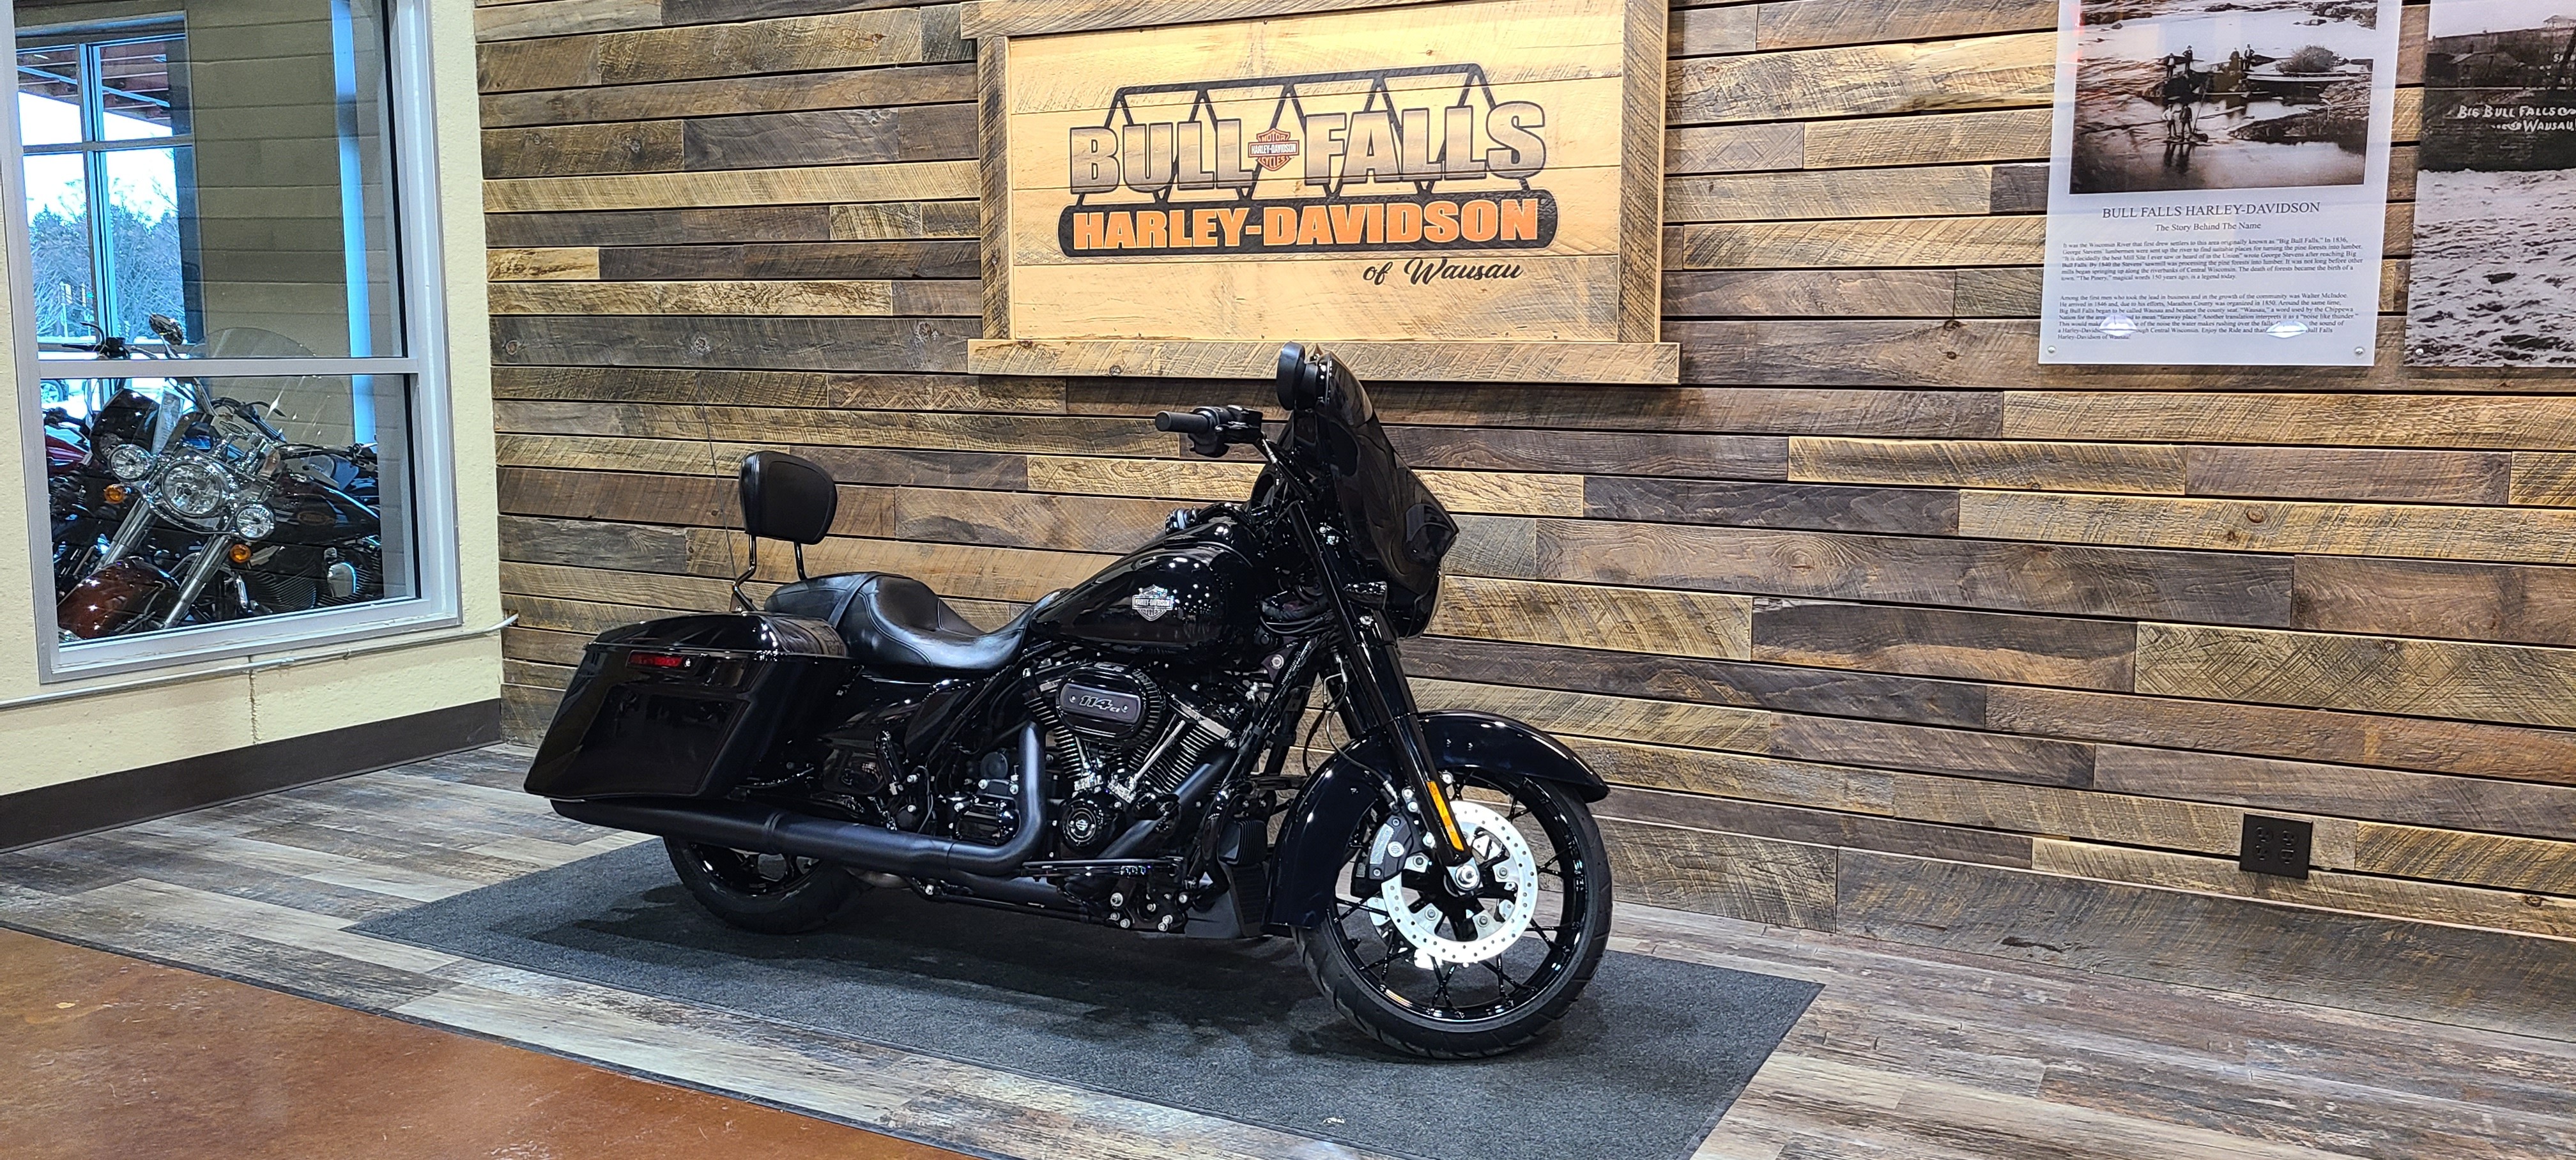 2021 Harley-Davidson Grand American Touring Street Glide Special at Bull Falls Harley-Davidson